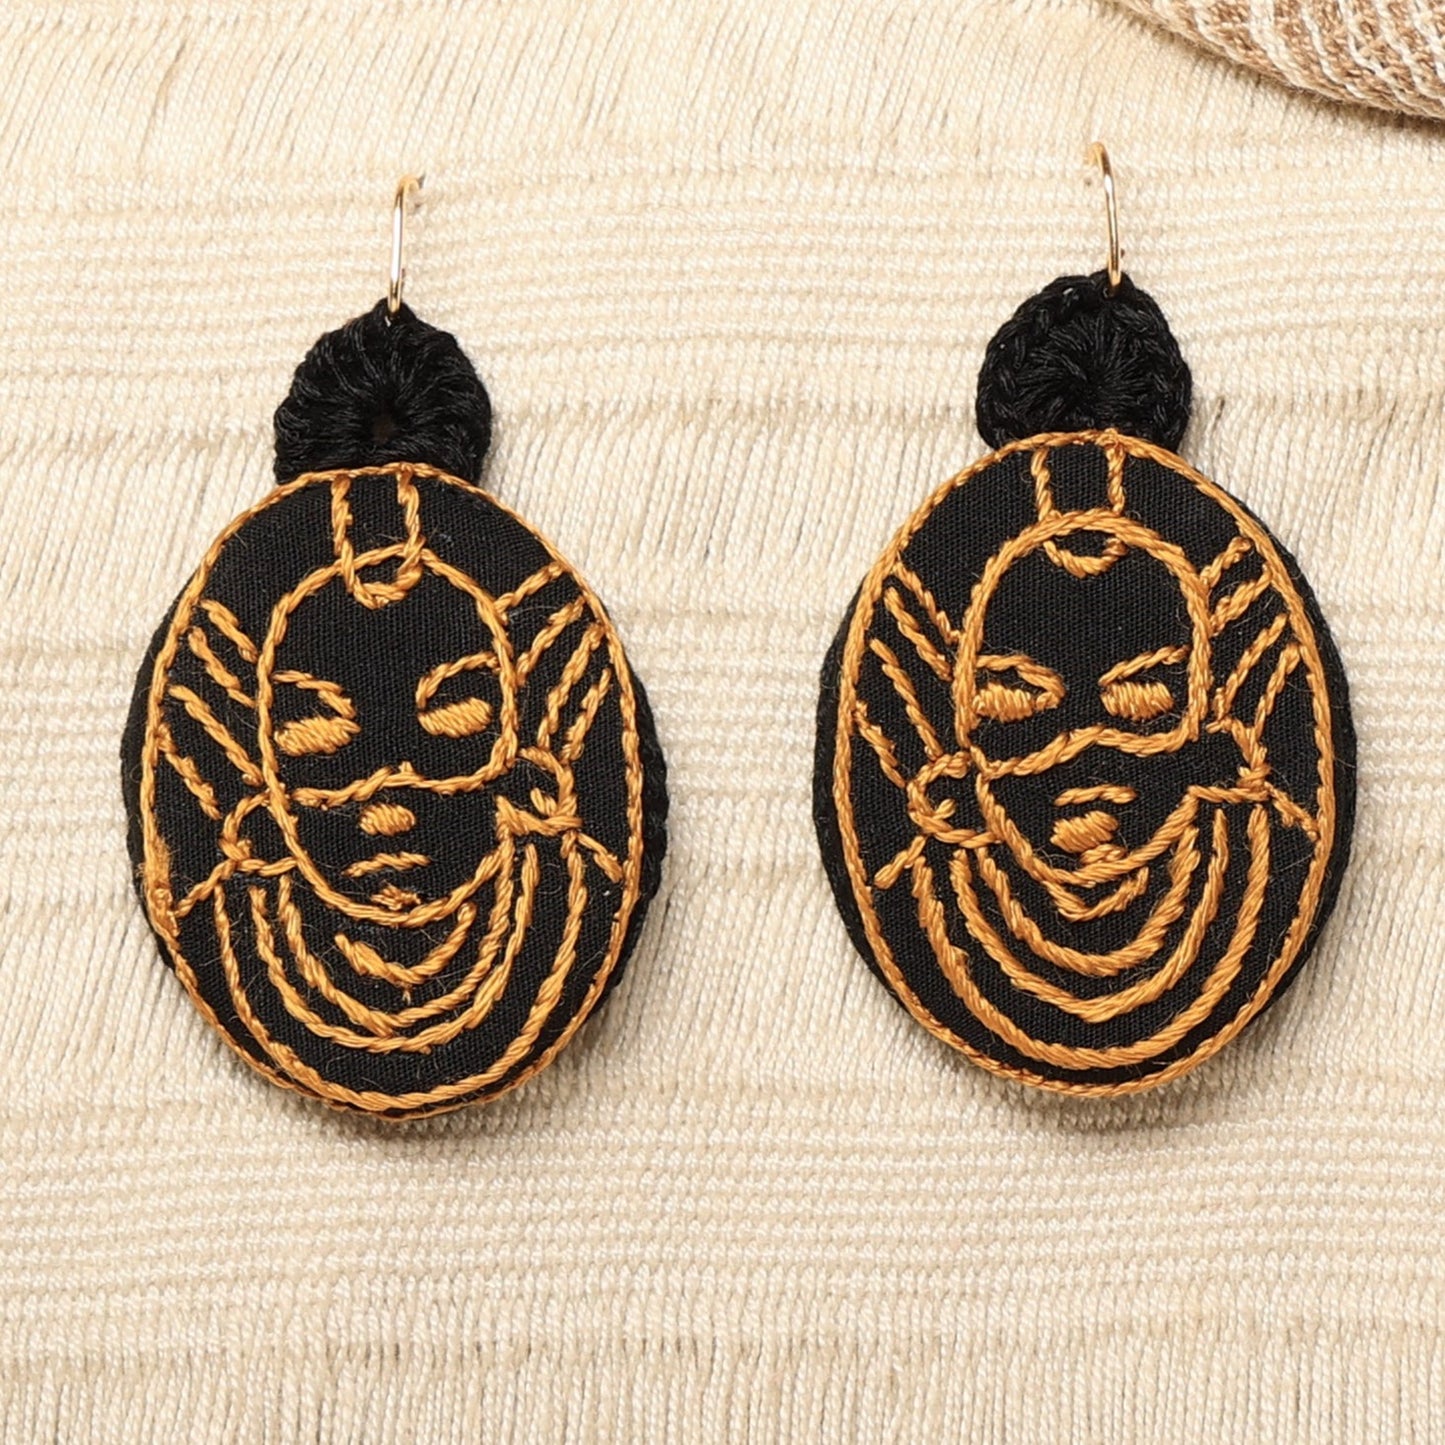 "Golden and black face" earrings